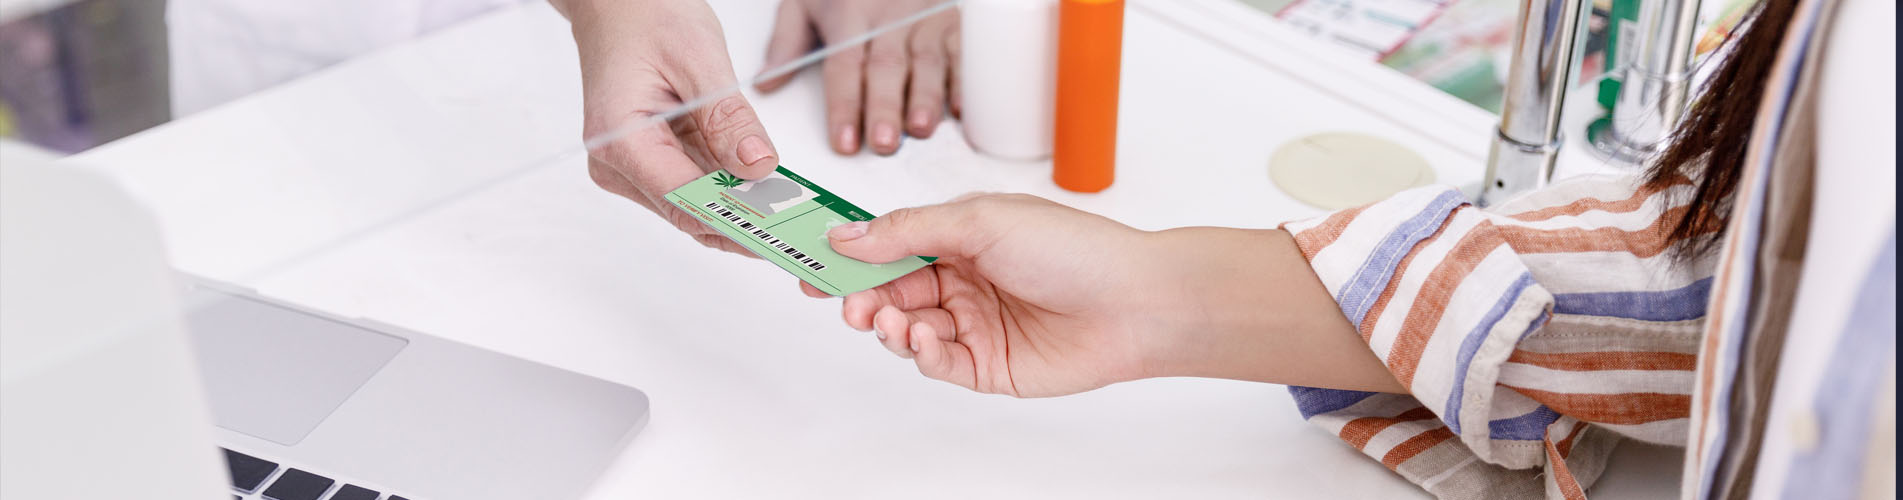 How to Use Your Nevada Marijuana Card at a Cannabis Dispensary?